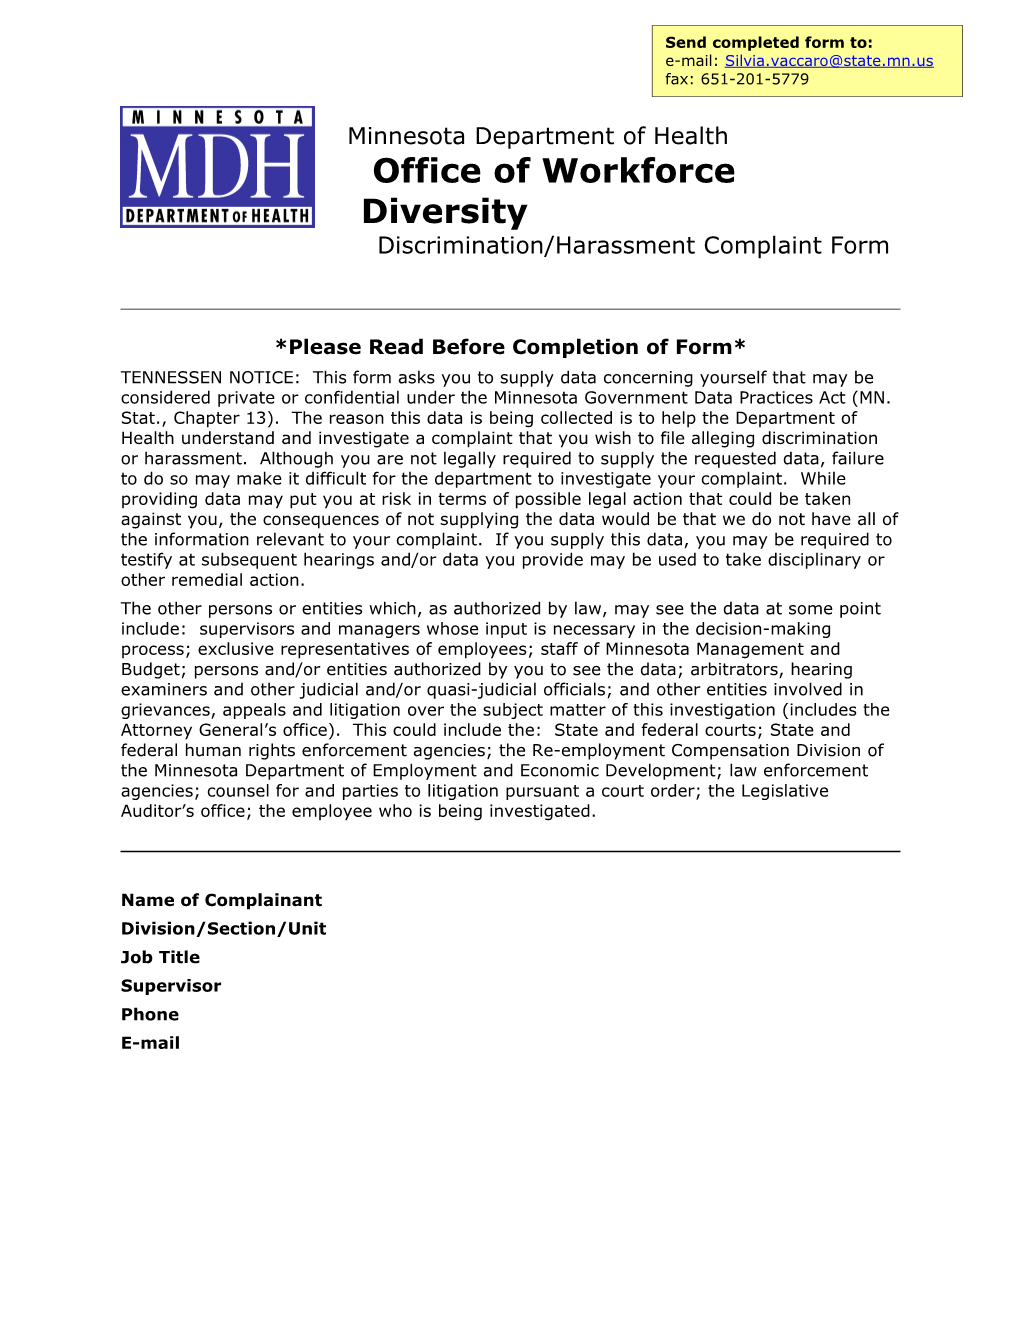 MDH Office of Workforce Diversity Discrimination/Harassment Complaint Form